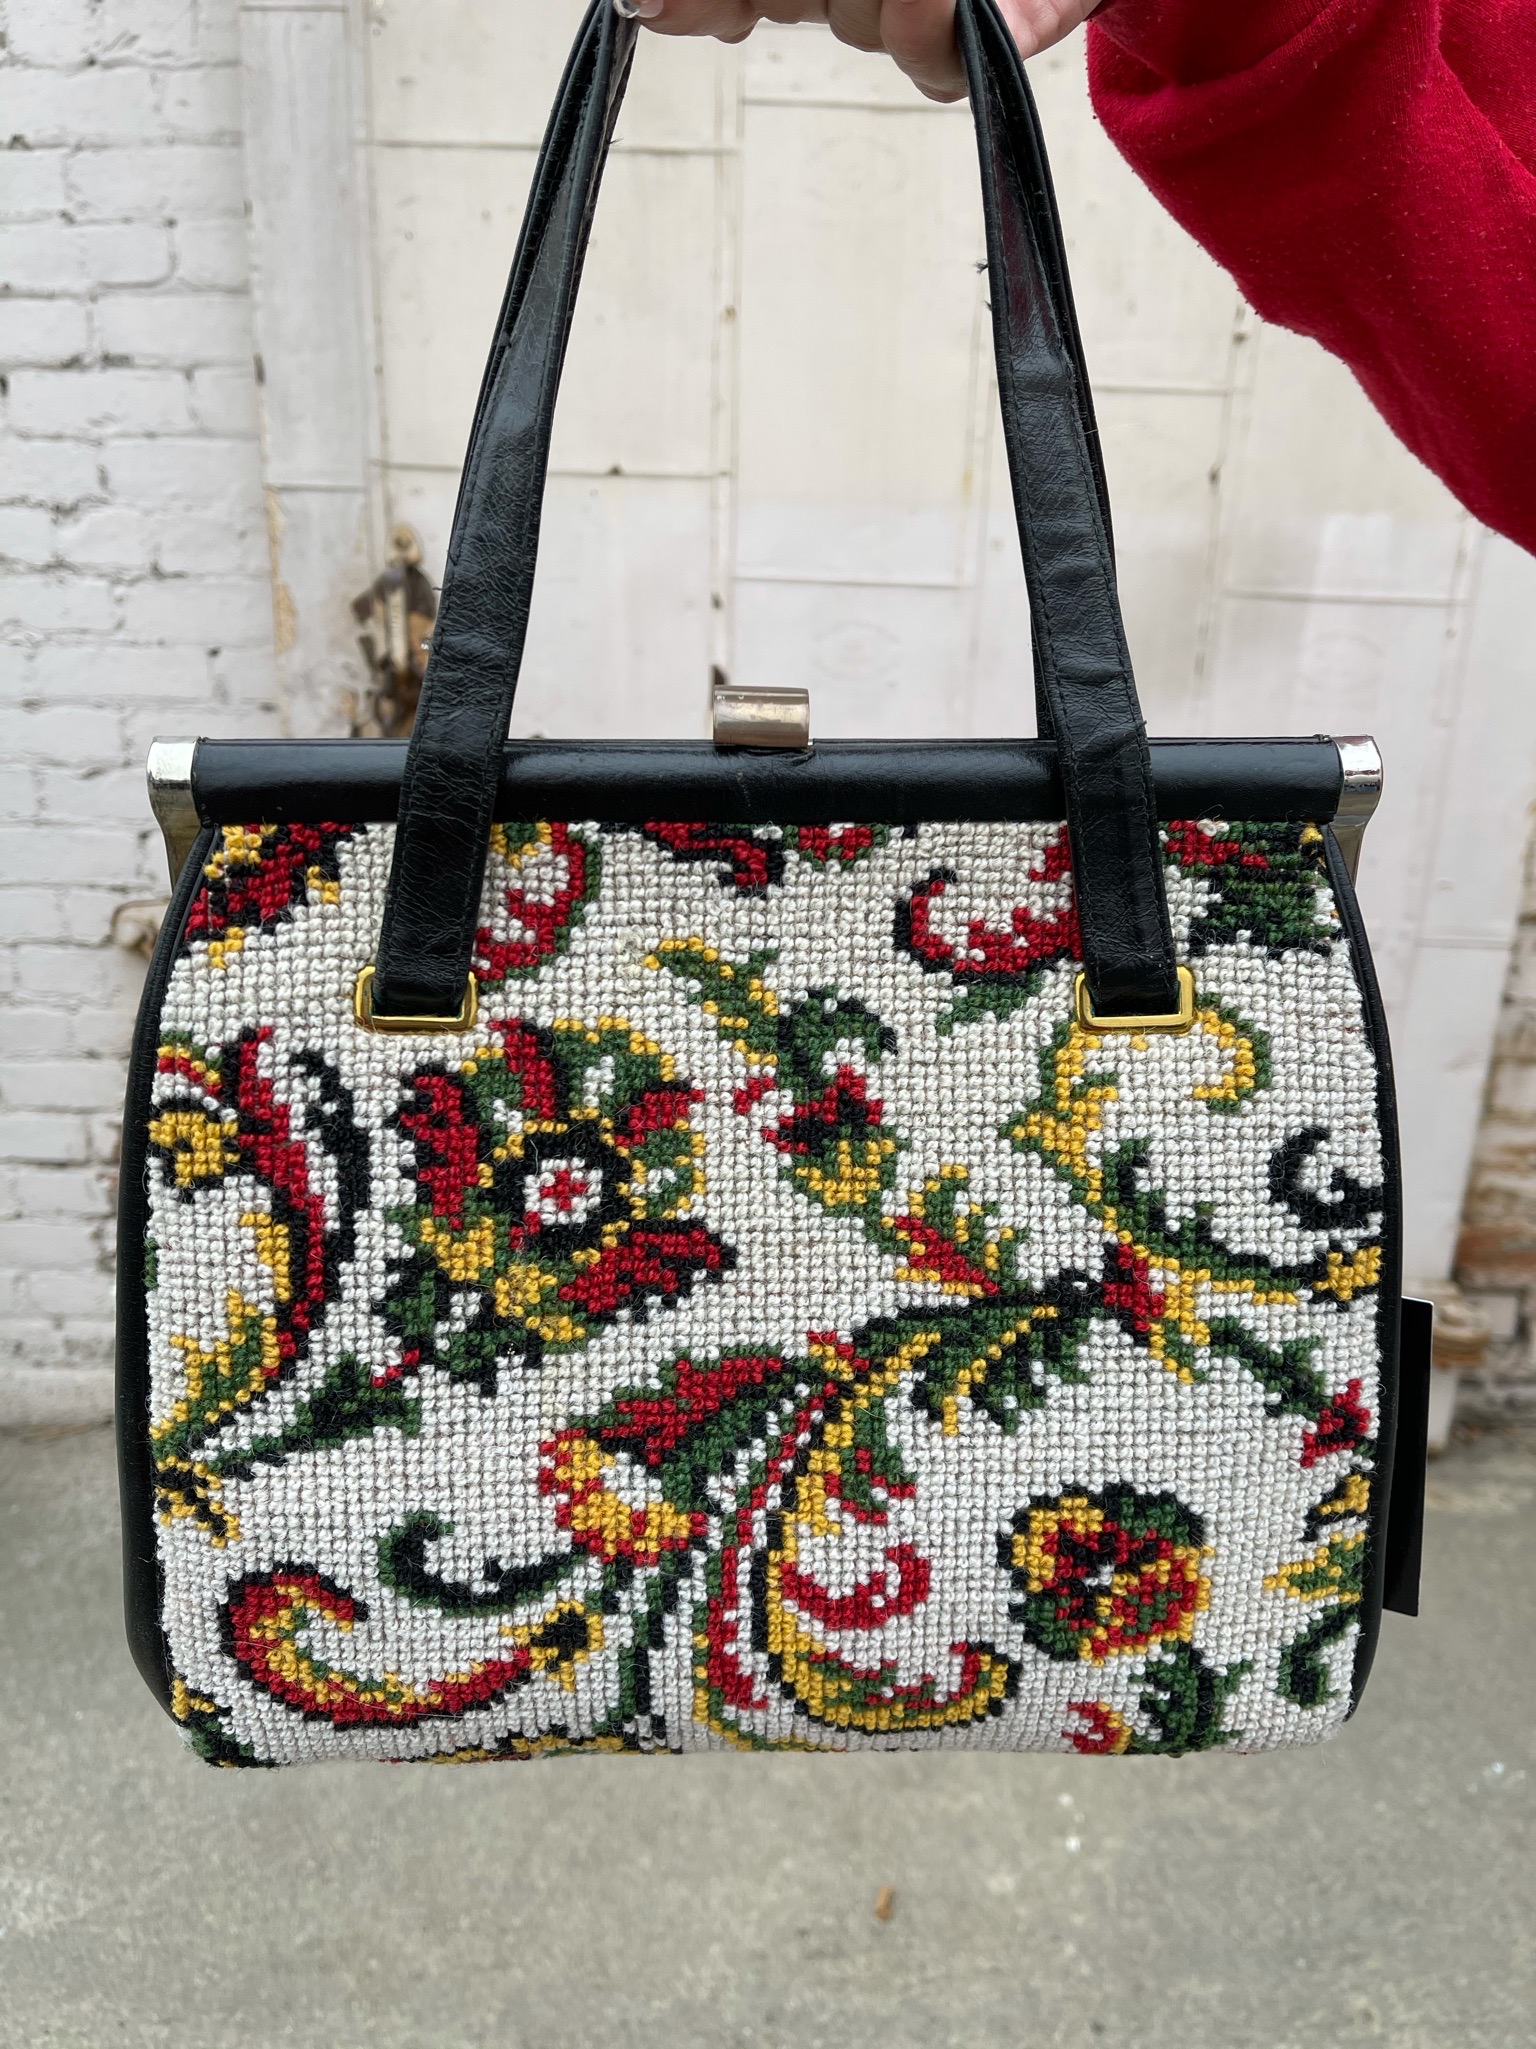 Julius Resnick Large Tapestry Handbag 1950s